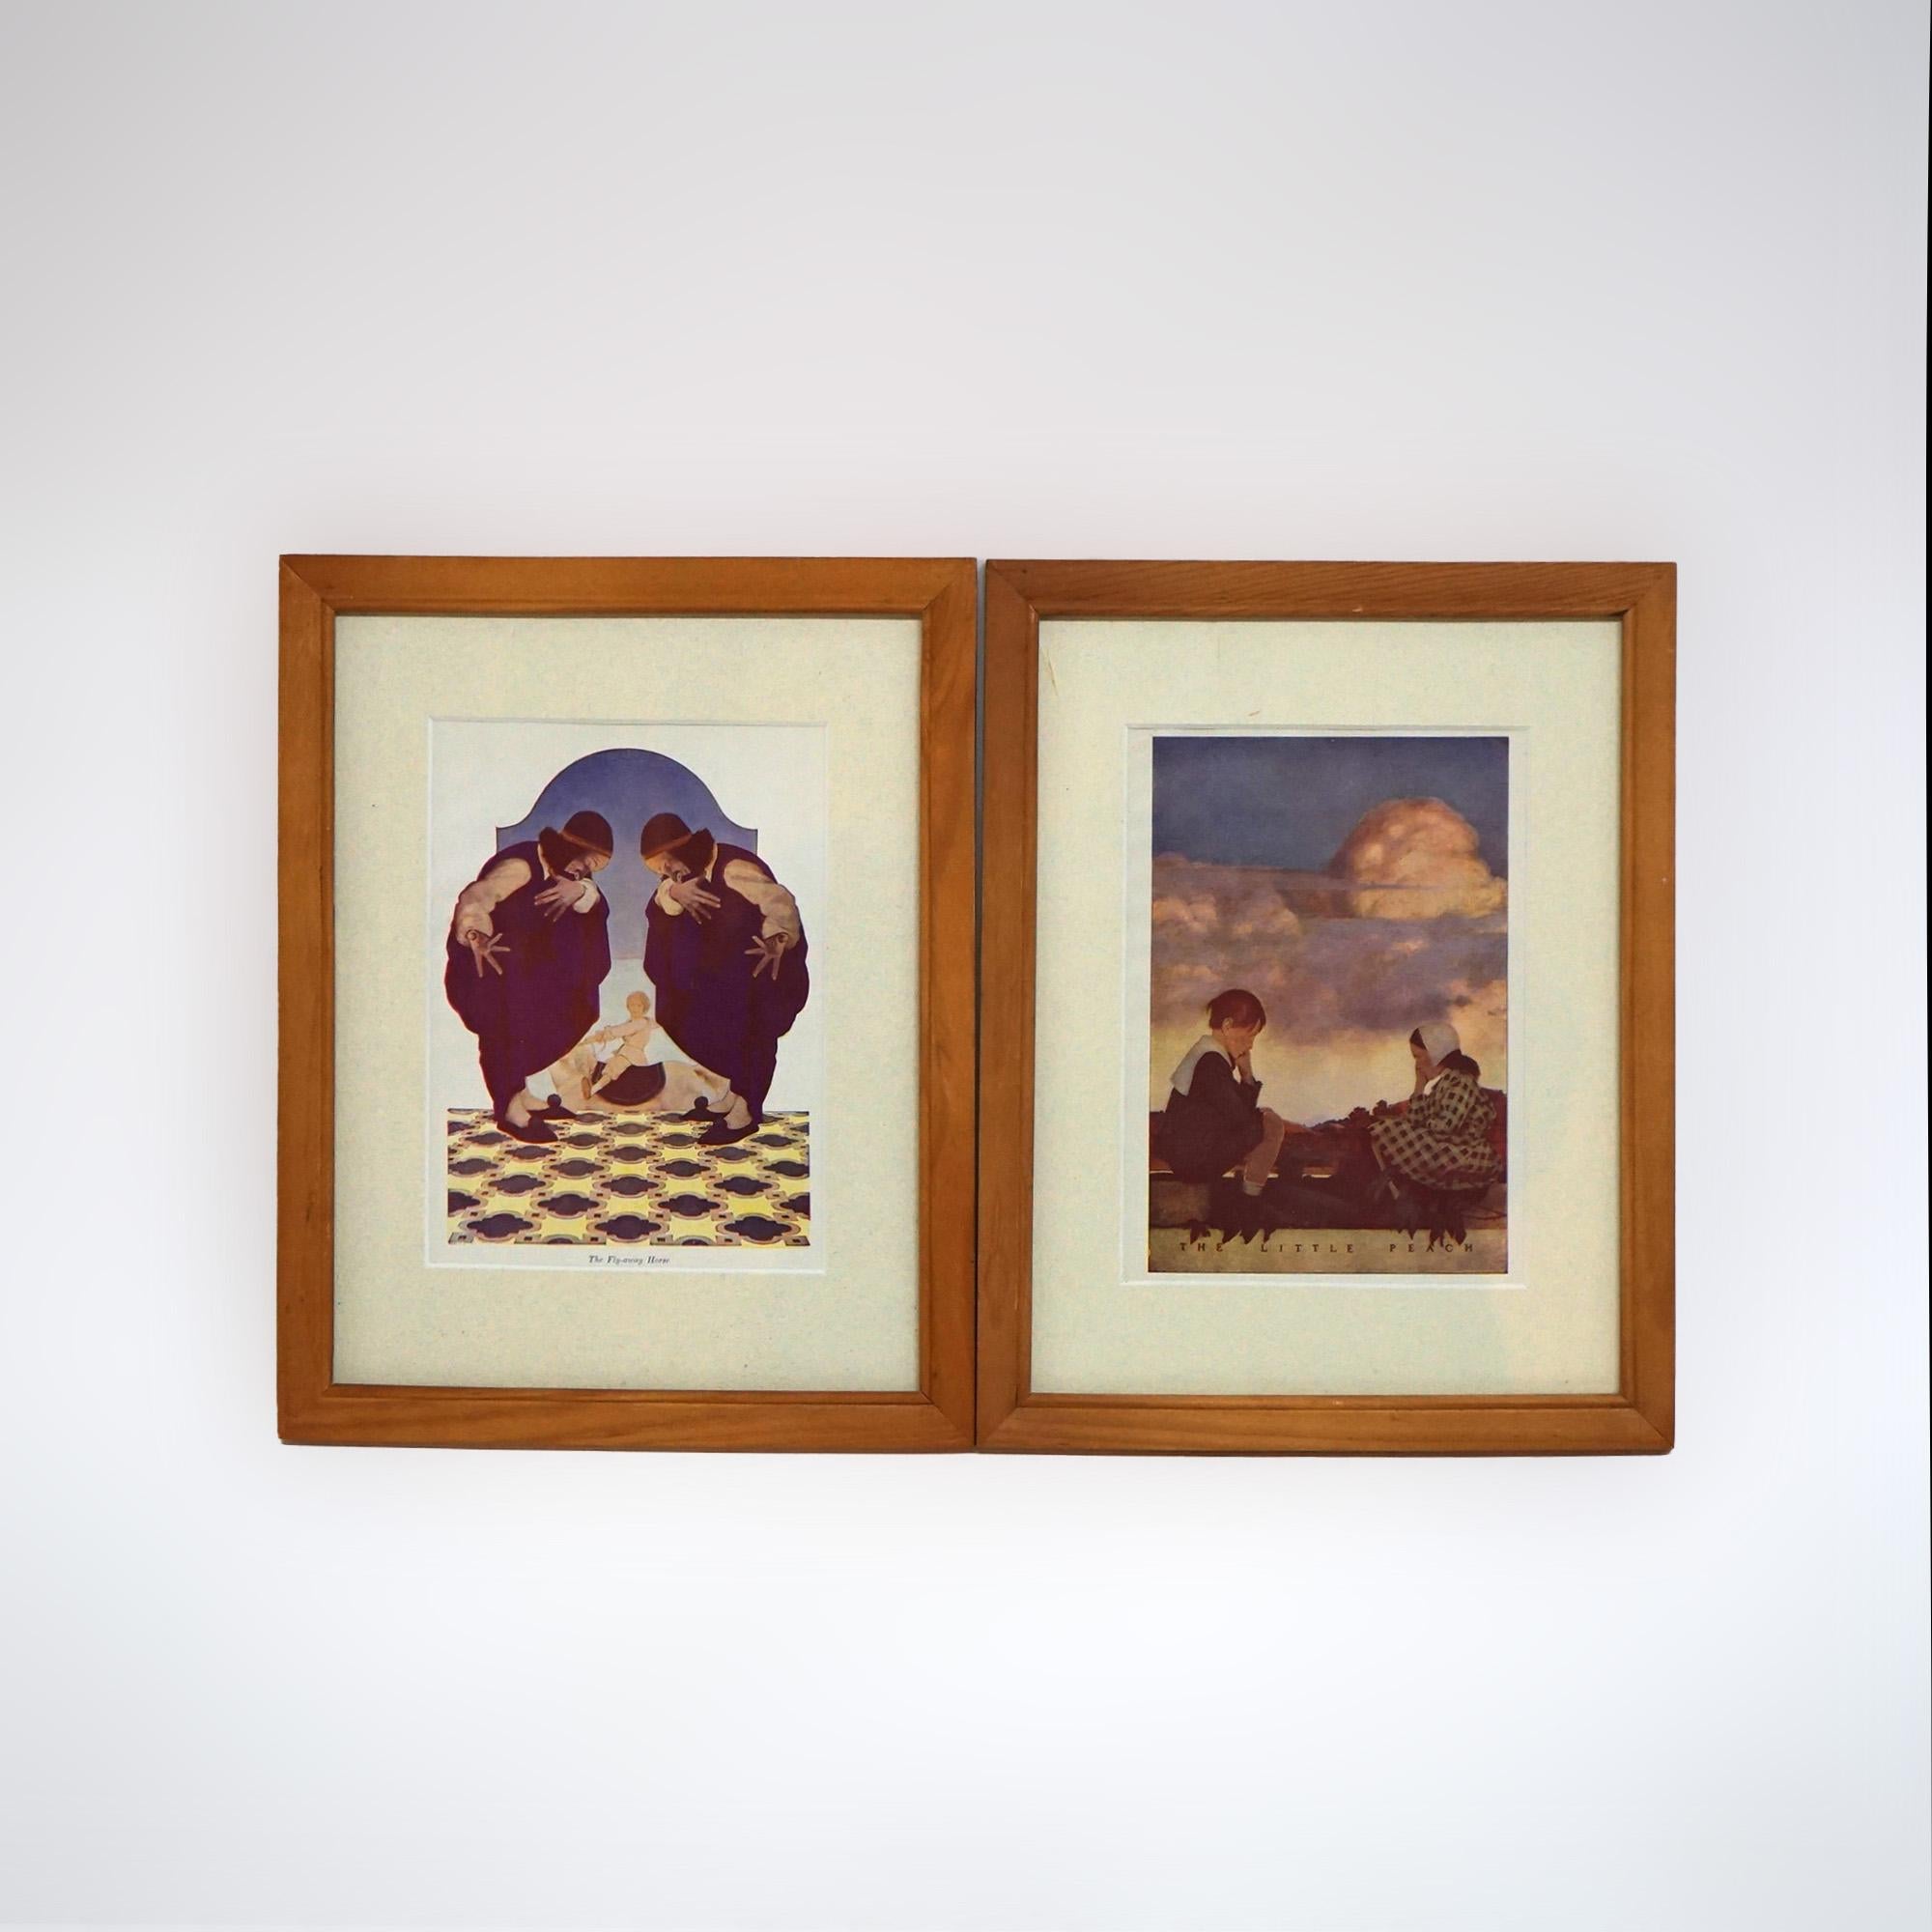 Five Art Deco Maxfield Parrish Bookplates, Framed, C1920

Measures - 12